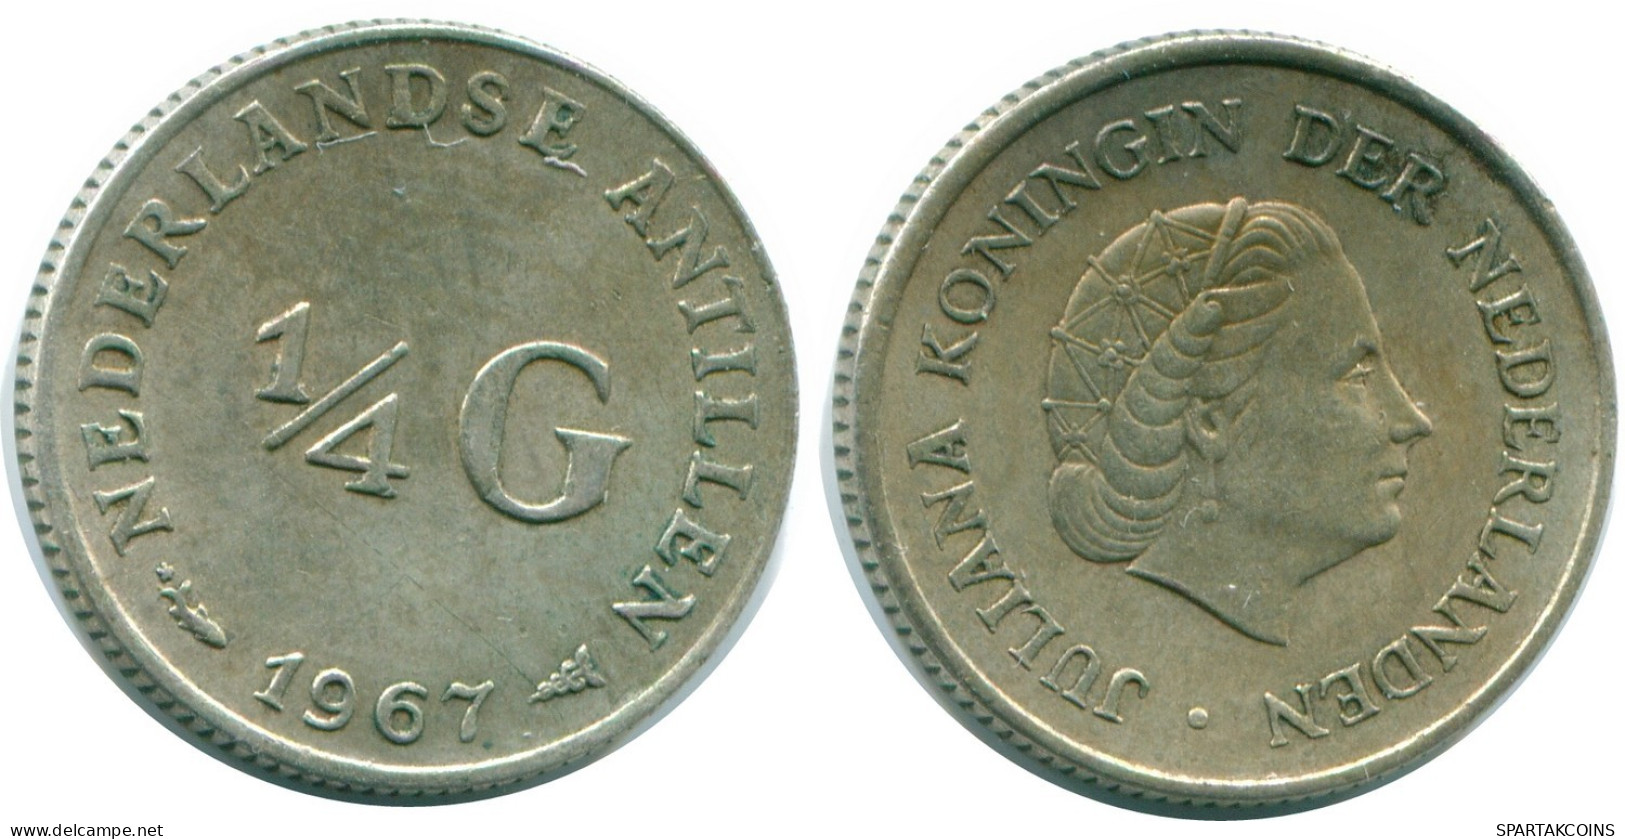 1/4 GULDEN 1967 NETHERLANDS ANTILLES SILVER Colonial Coin #NL11601.4.U.A - Netherlands Antilles